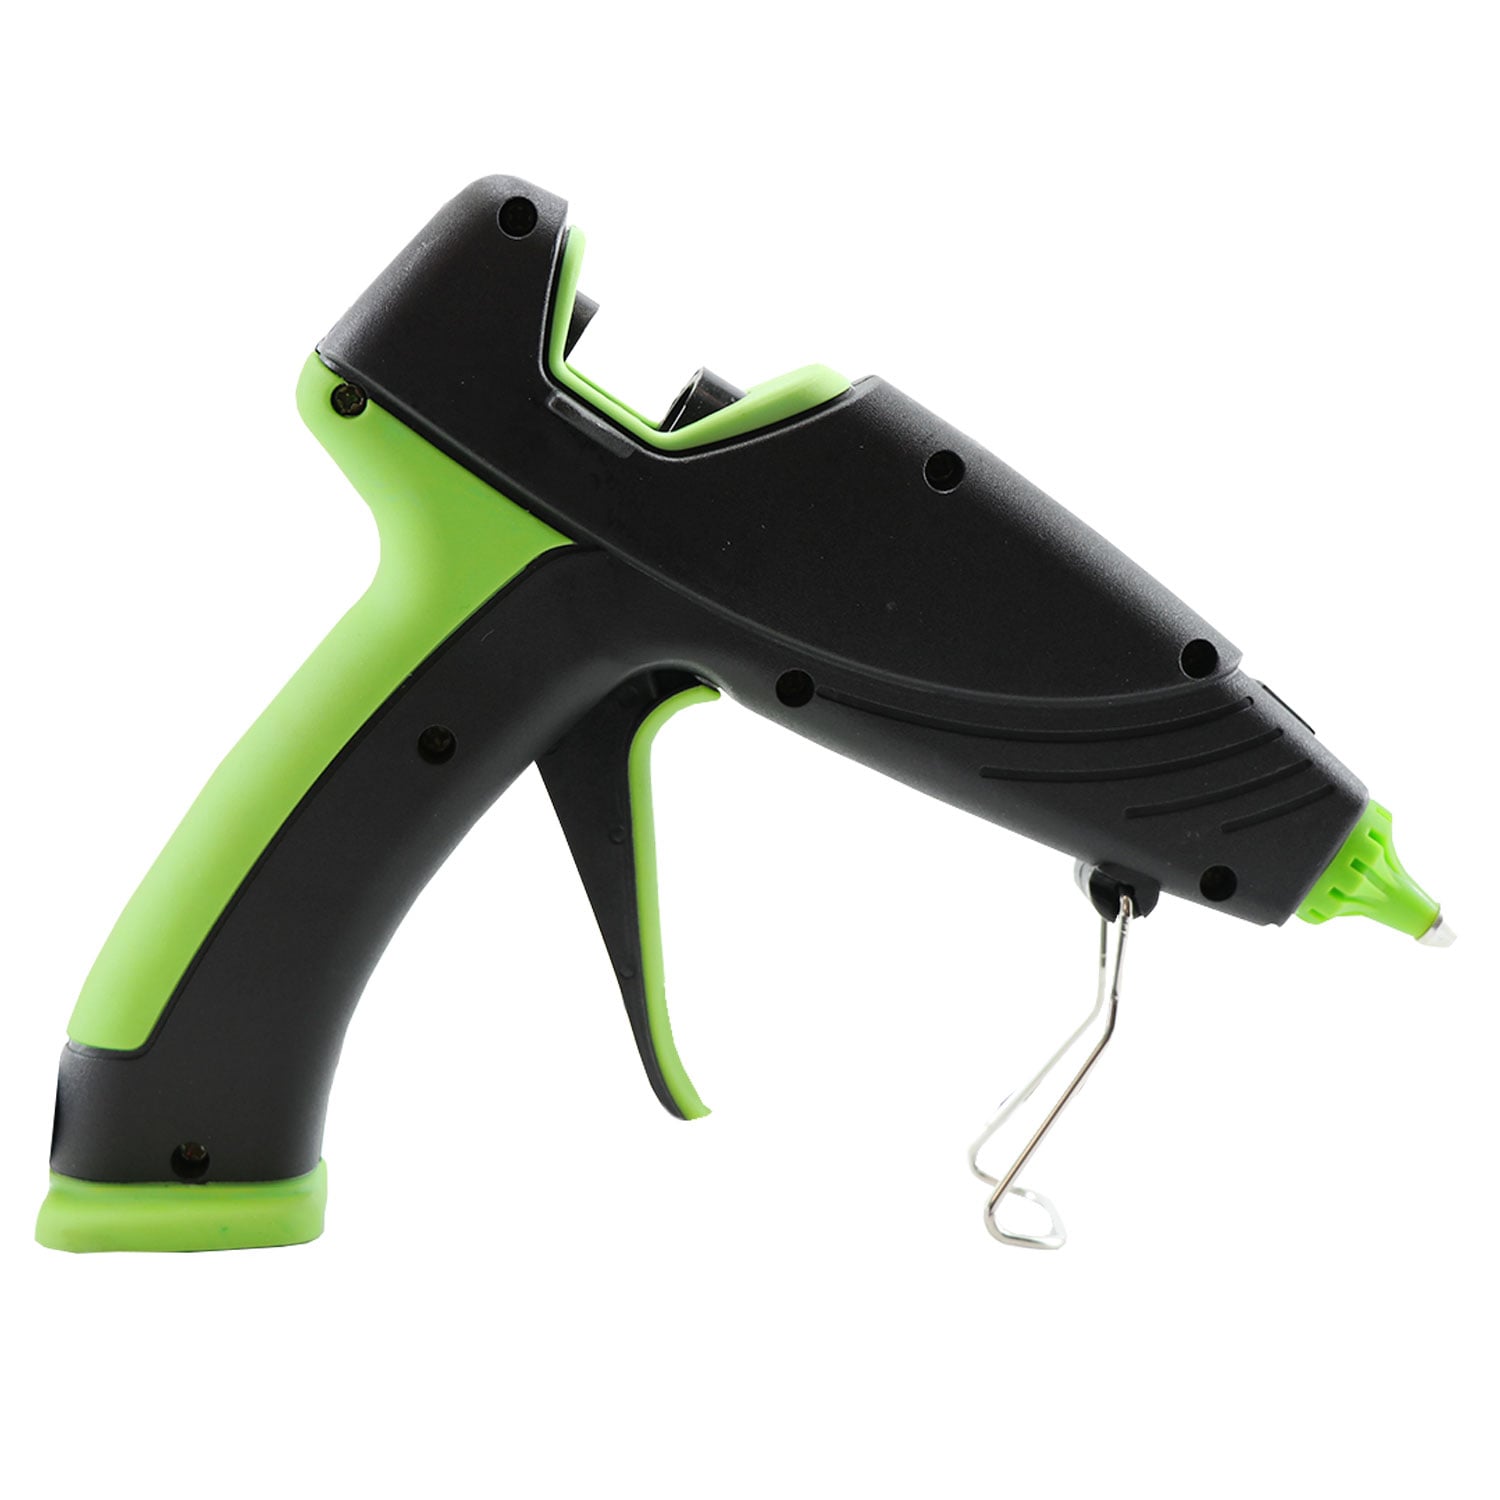 Surebonder Ultra Series Dual Temperature Hot Glue Gun, Green FPRDT360F •  Price »